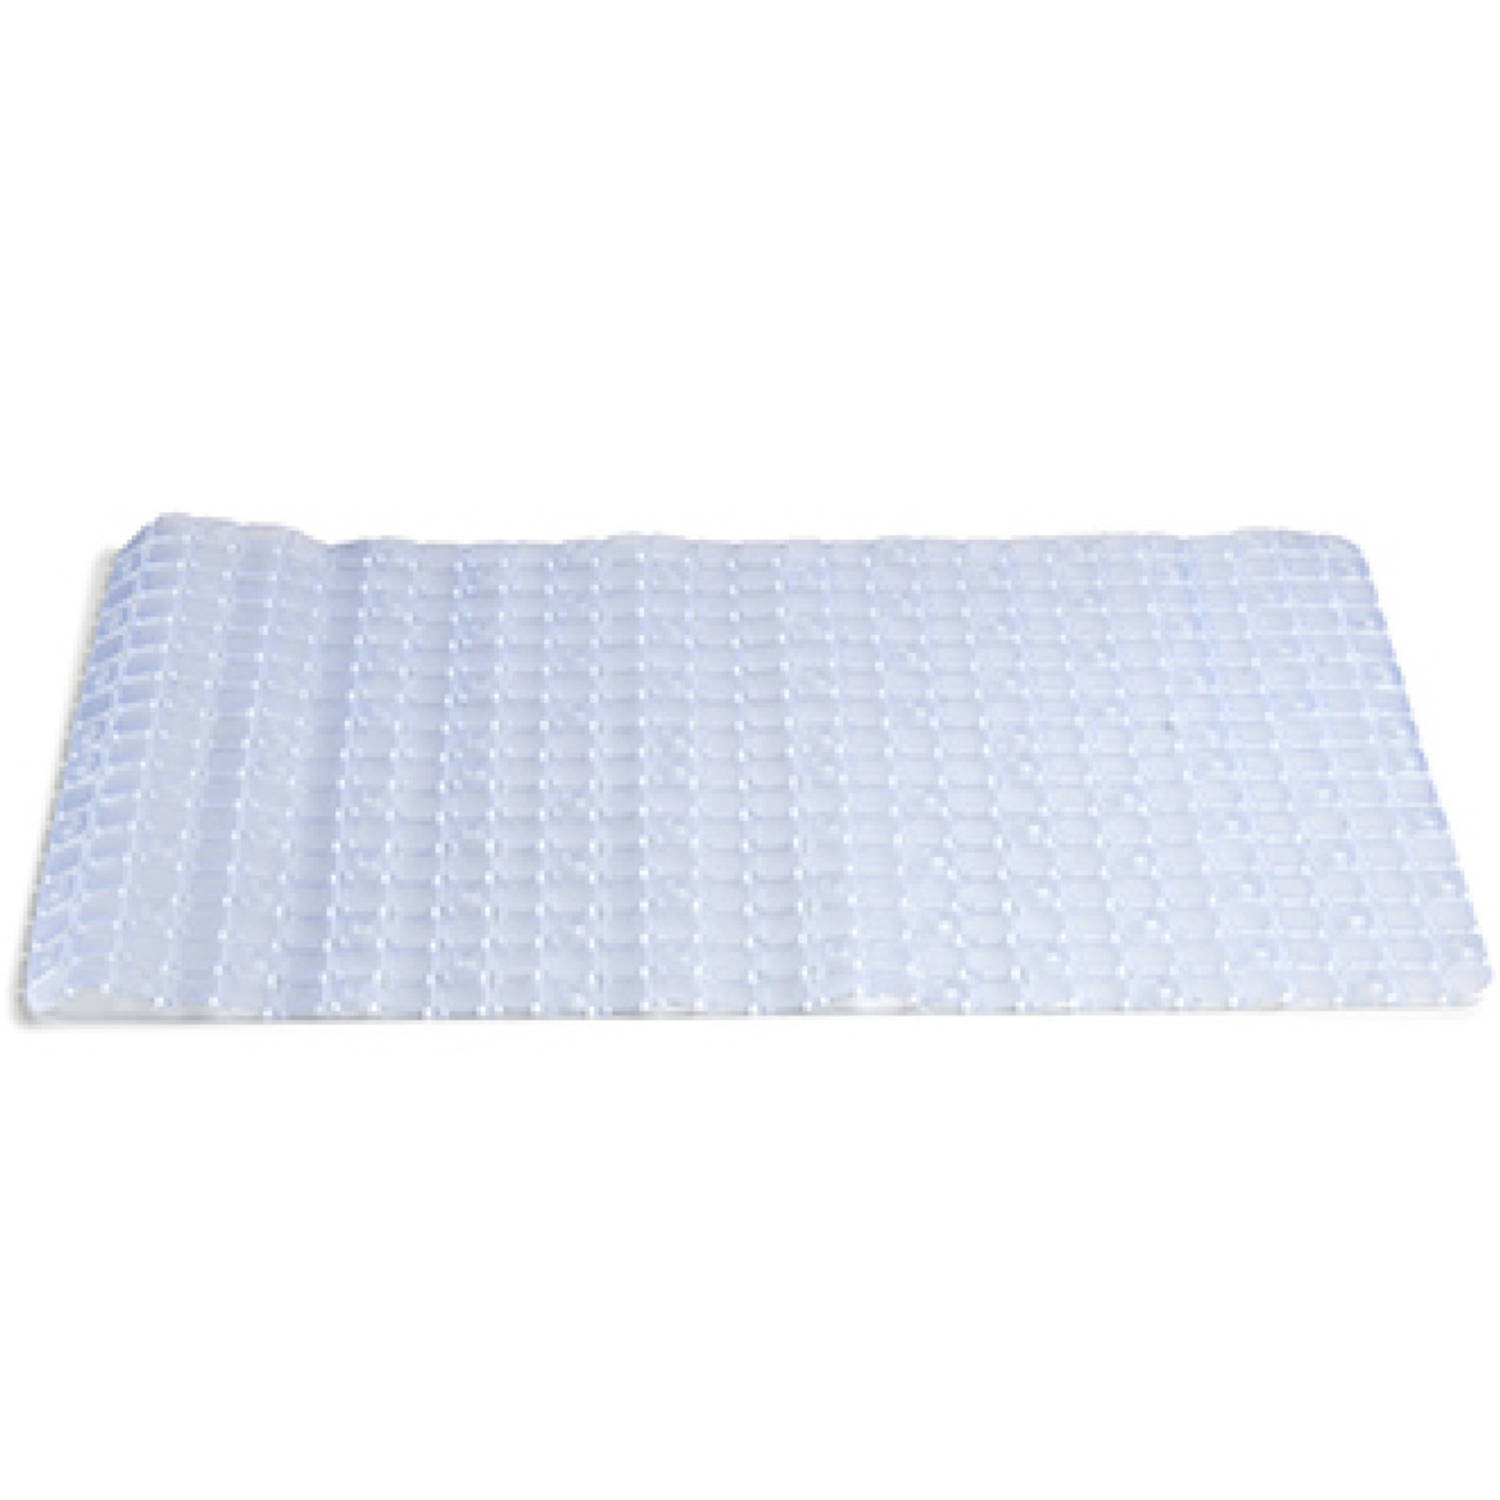 Badmat/douchemat anti-slip transparant vierkant patroon 69 x 39 cm - Badmatjes